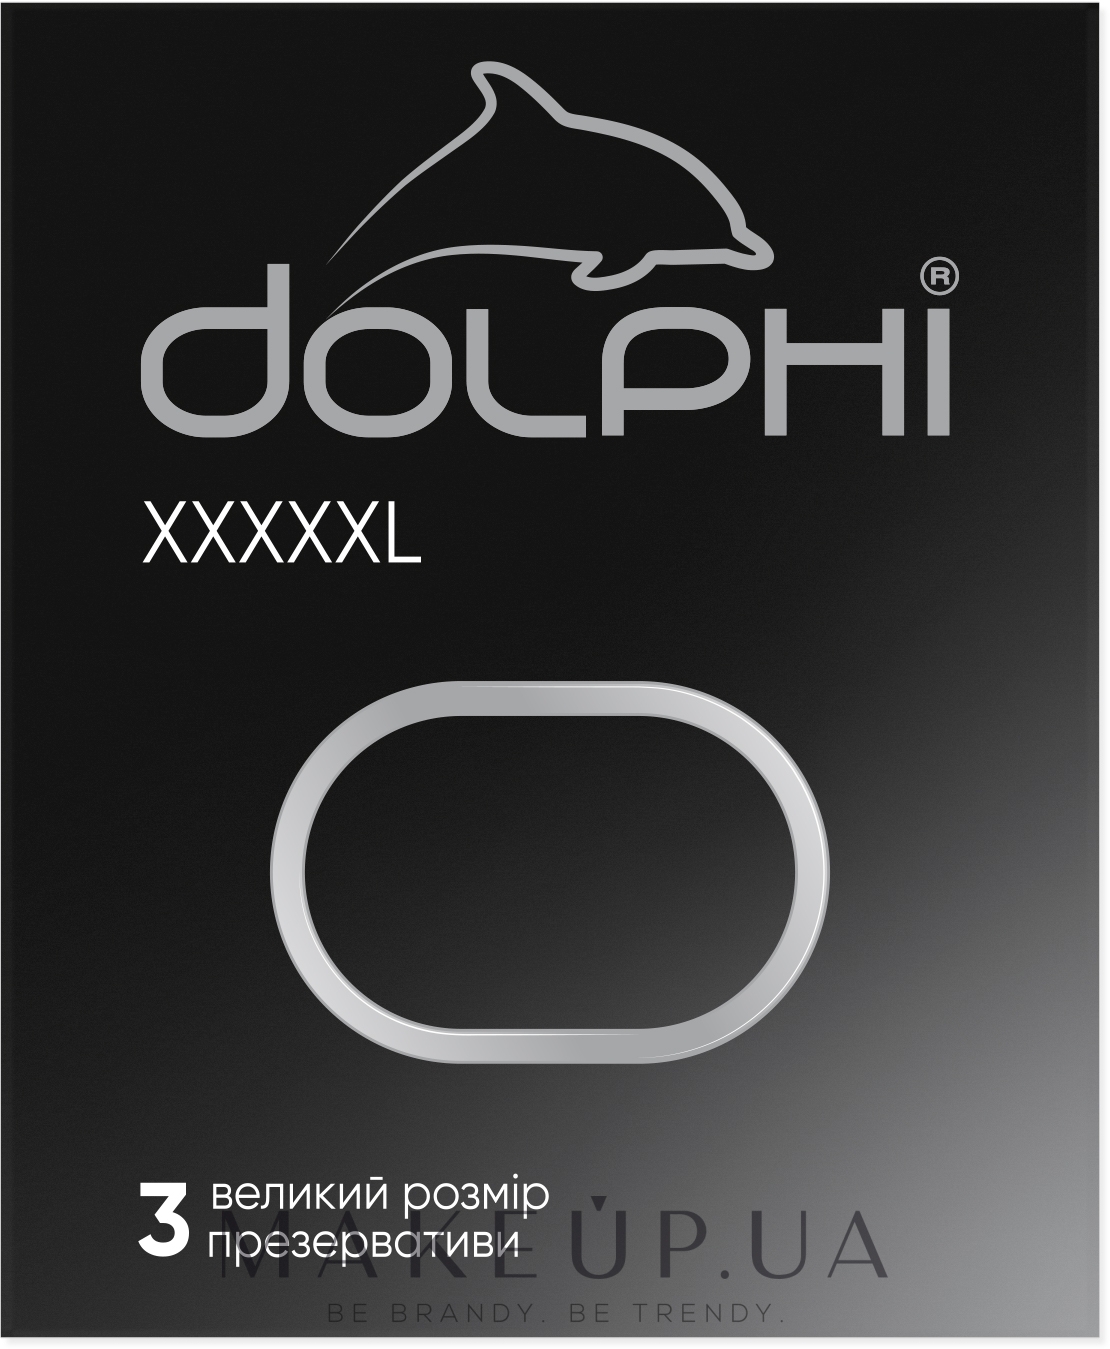 Презервативы "XXXXXL" - Dolphi — фото 3шт